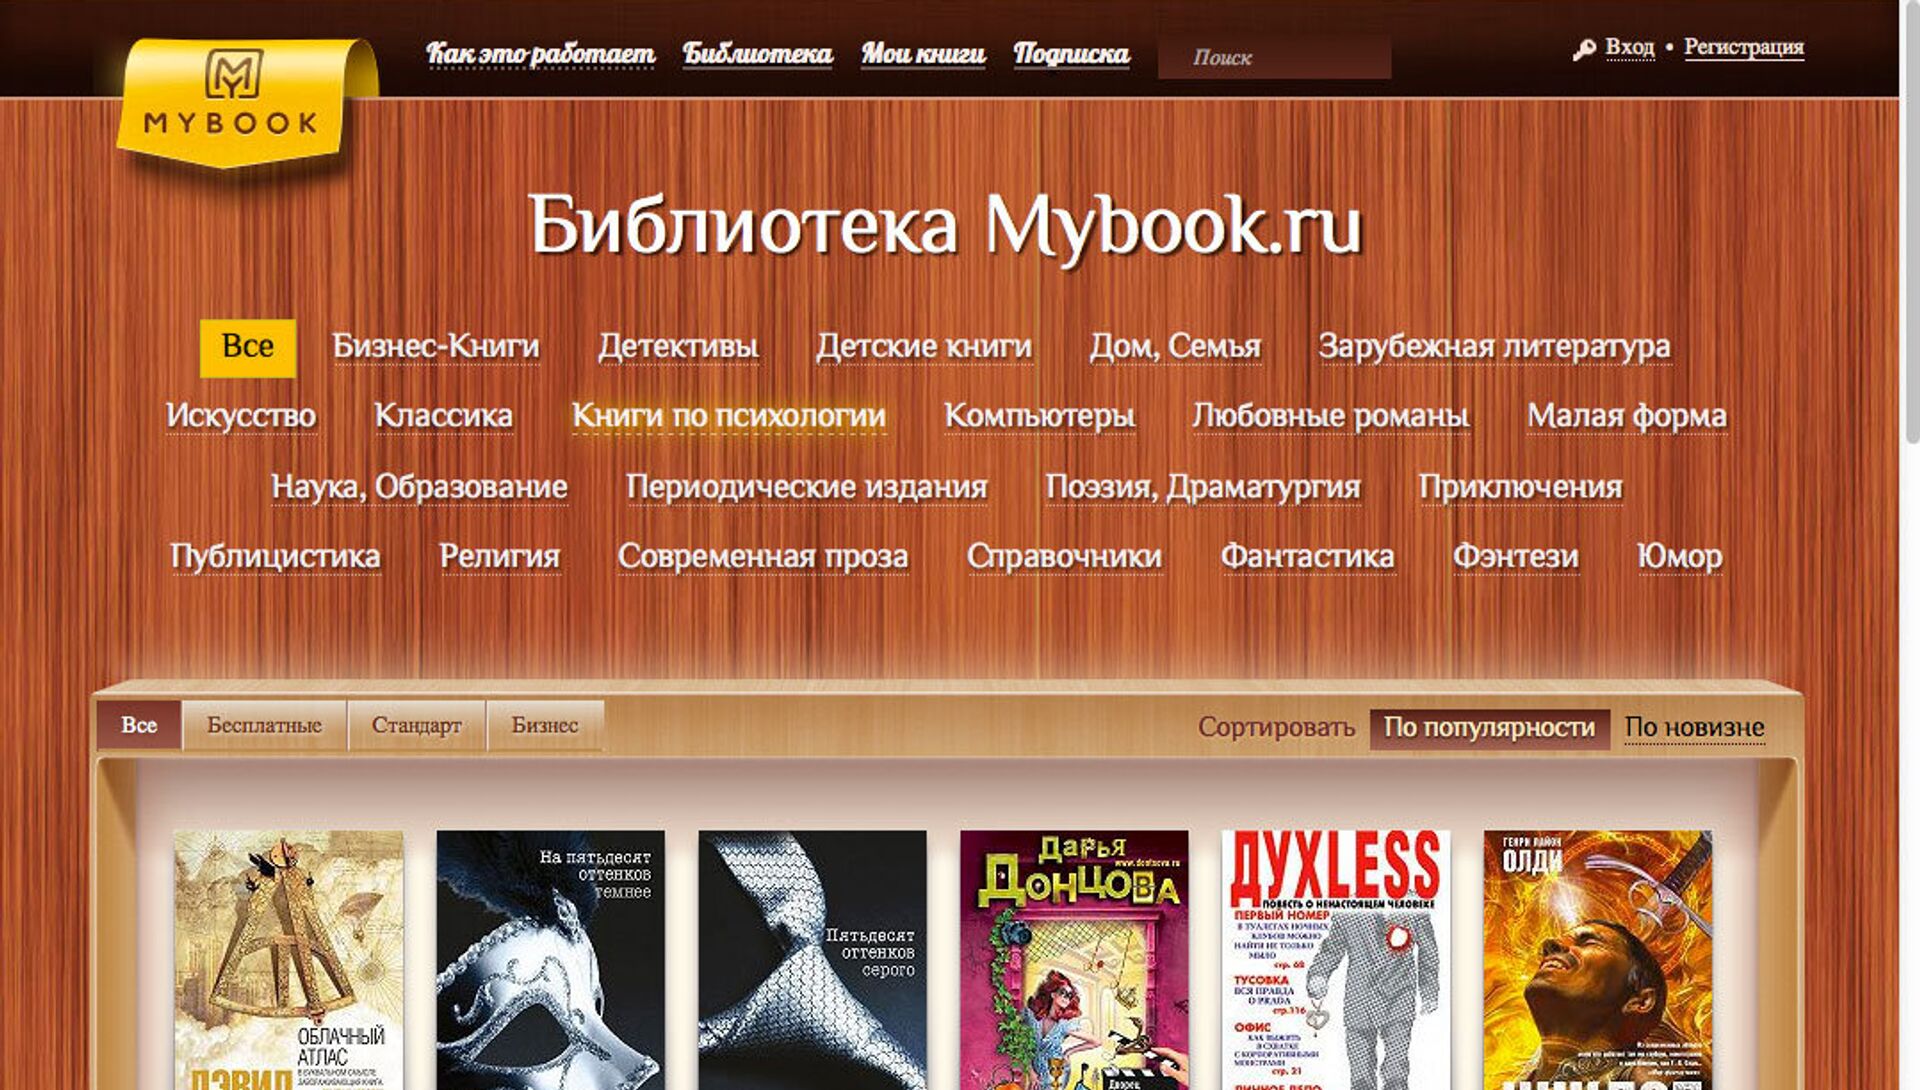 My book library. My book библиотека. Электронной библиотеке MYBO. Мой бук. Книги на MYBOOK.